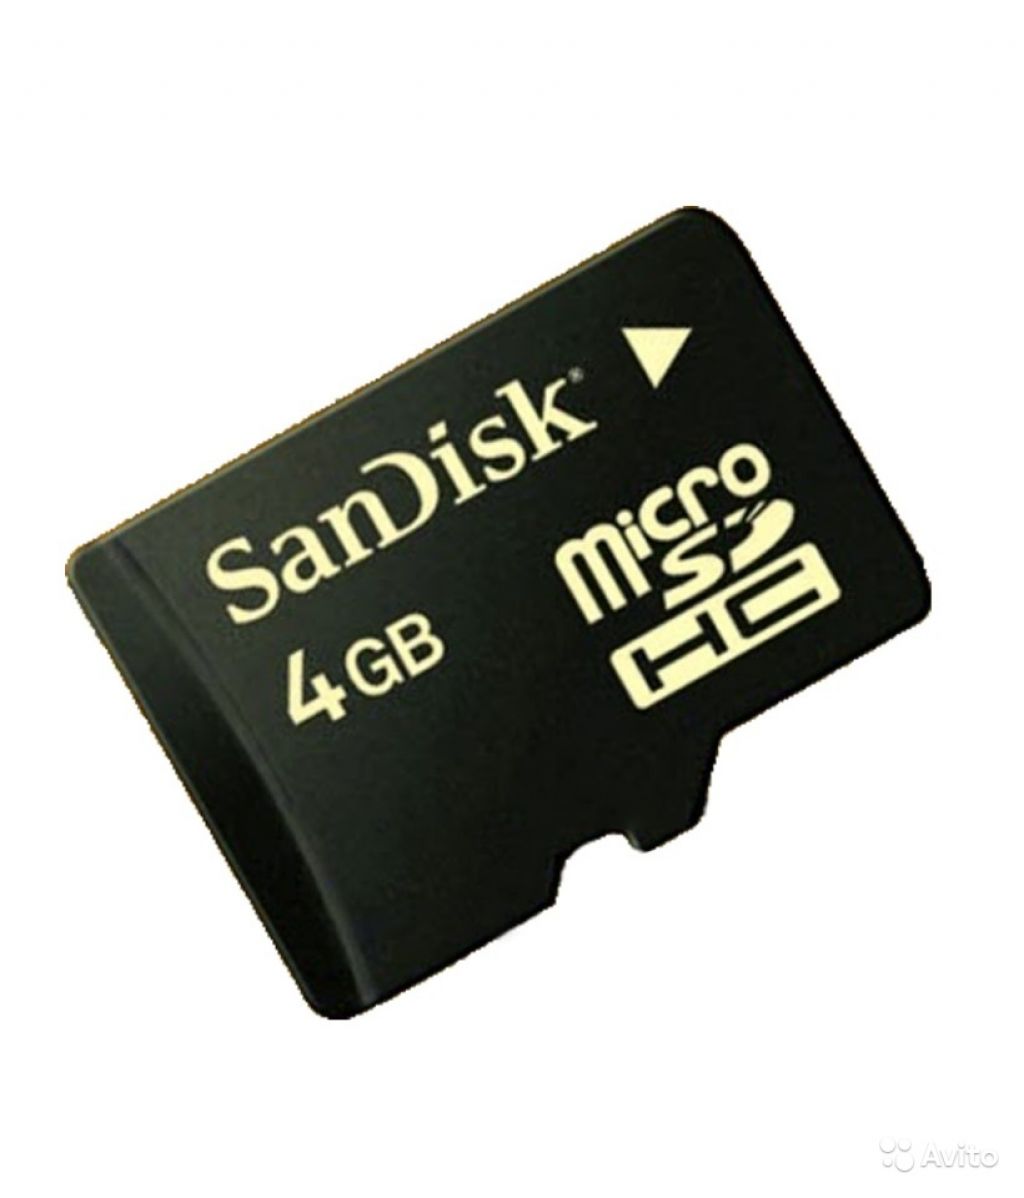 Флешка 32 микро. Флешки микро SD SANDISK. MICROSD 4 GB. Флешка SANDISK 4gb. Флешки микро на 4 ГБ.